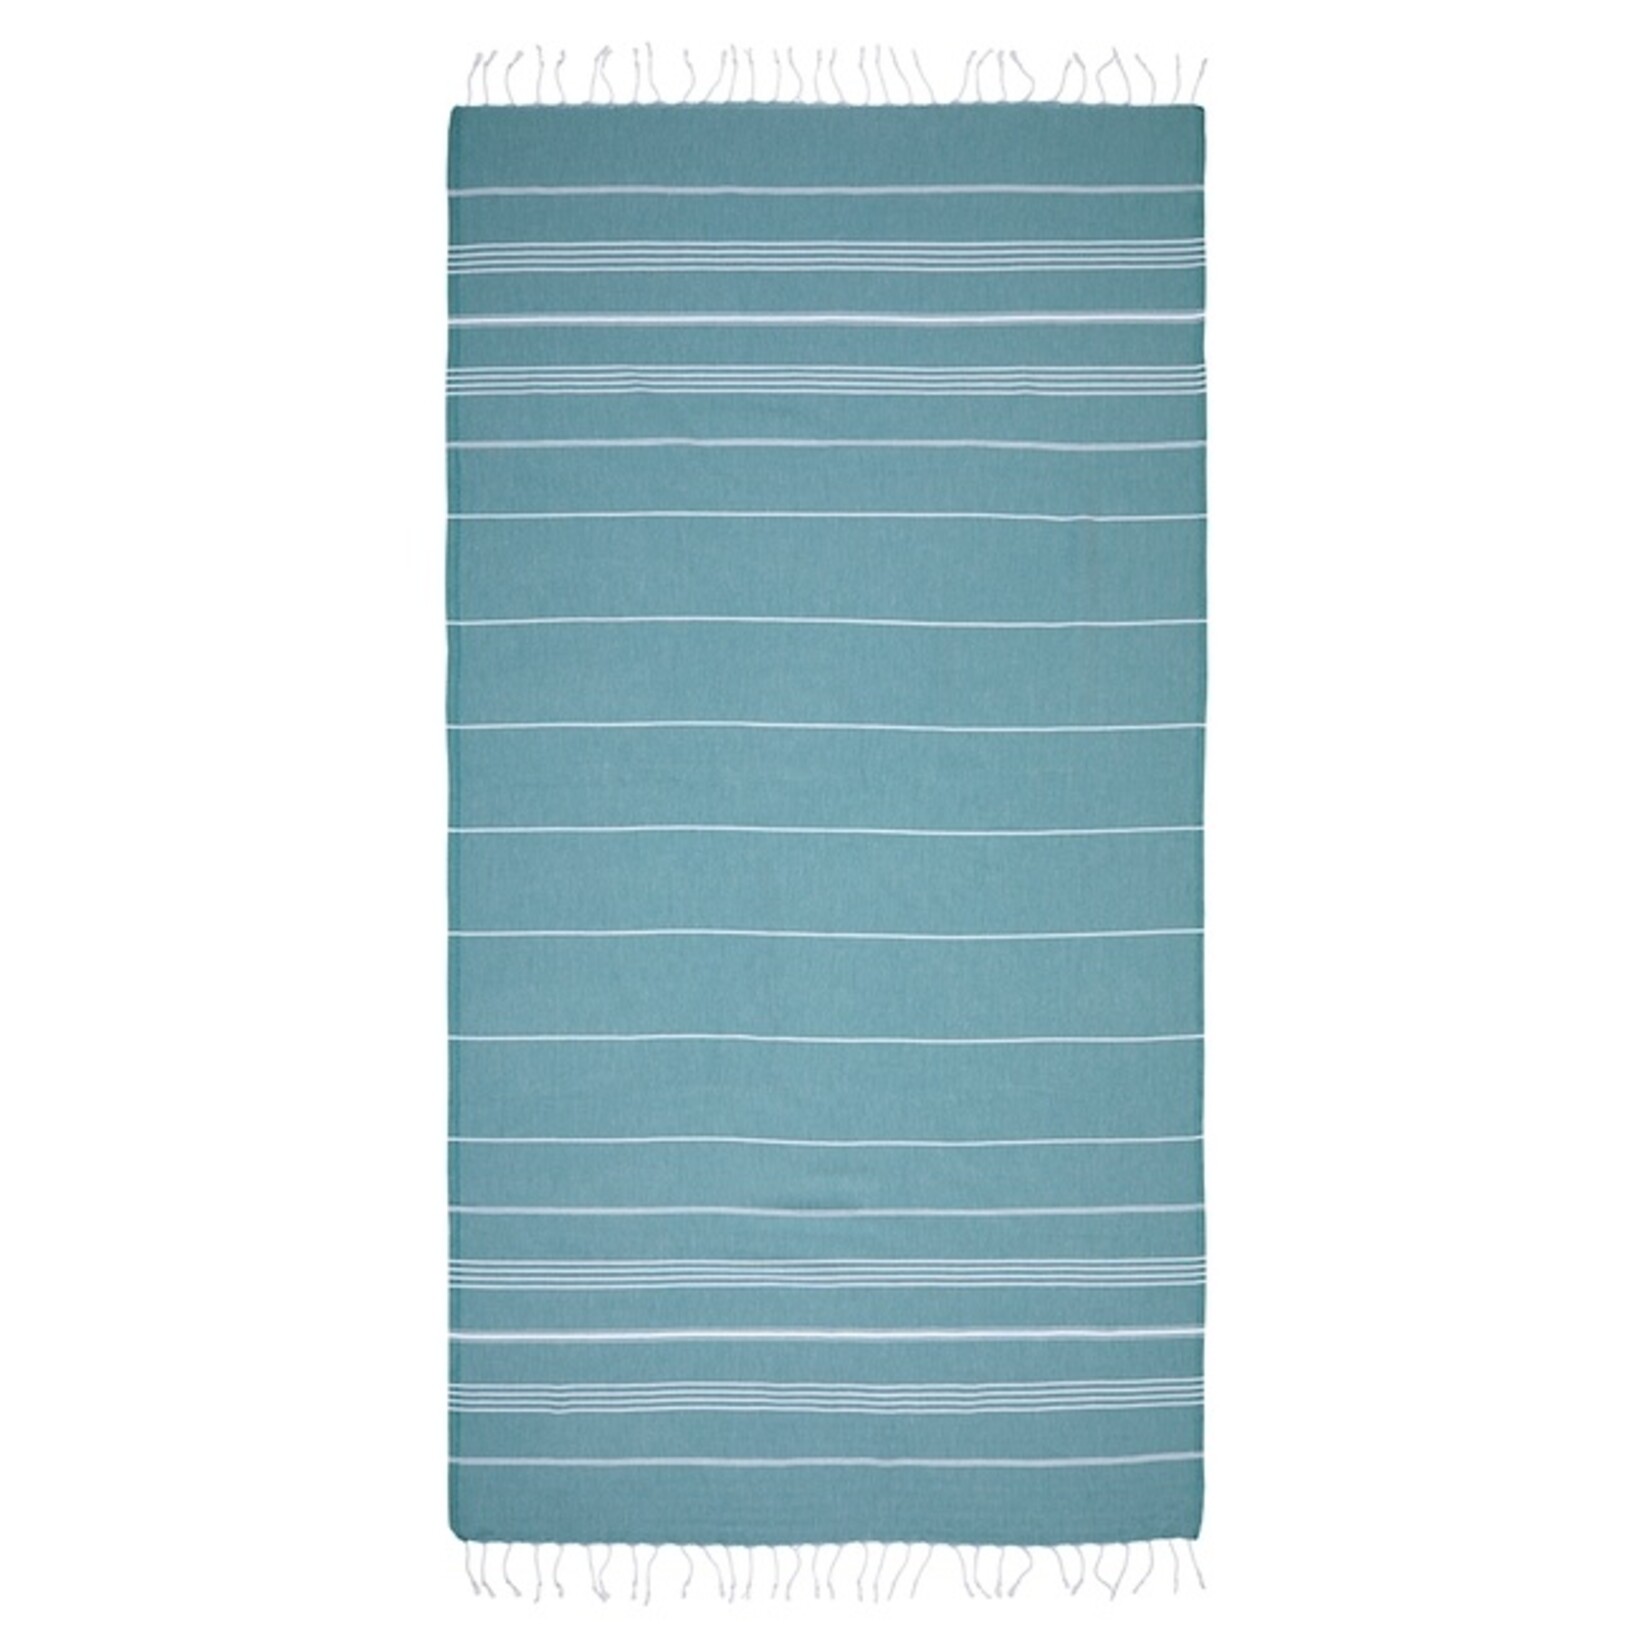 Turkish Towel - Sage Stripe